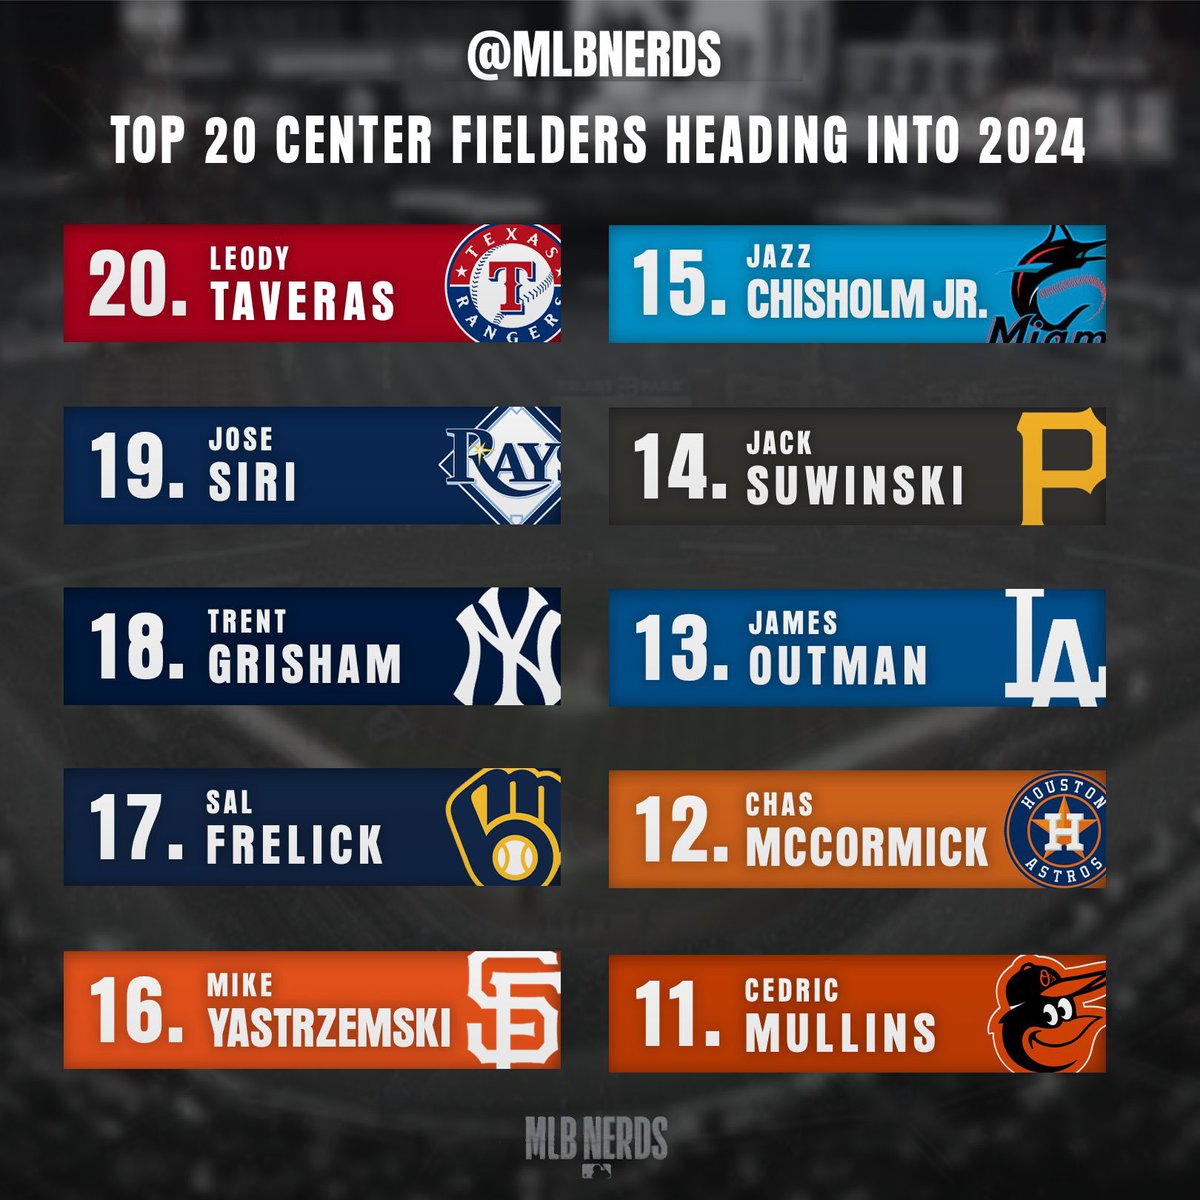 Top 20 Center Fielders (20-11) for the 2024 season.